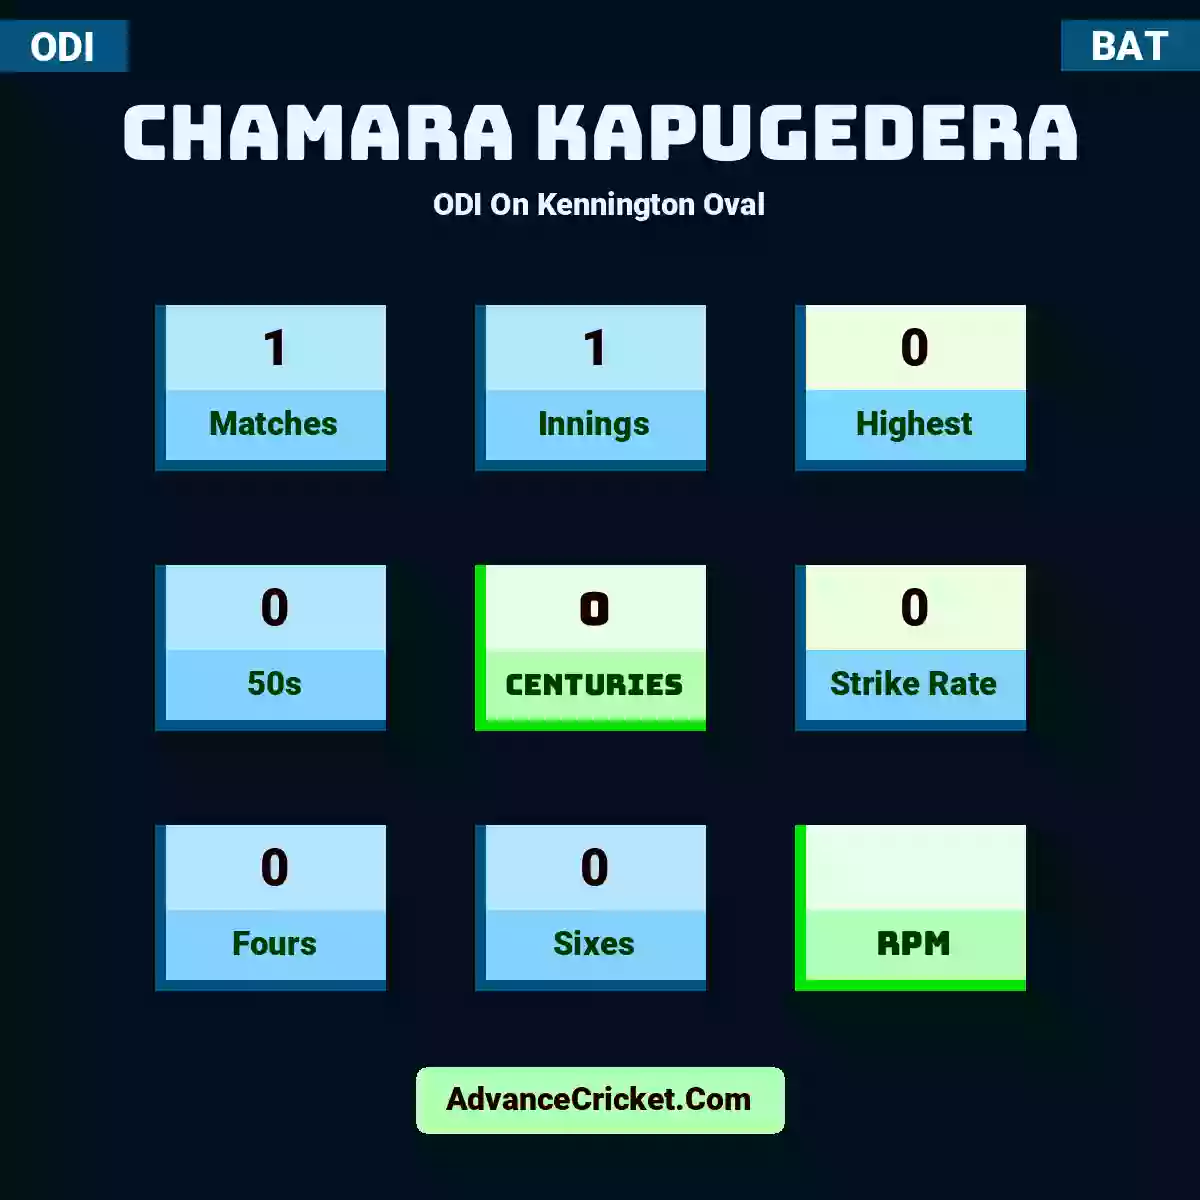 Chamara Kapugedera ODI  On Kennington Oval, Chamara Kapugedera played 1 matches, scored 0 runs as highest, 0 half-centuries, and 0 centuries, with a strike rate of 0. C.Kapugedera hit 0 fours and 0 sixes.